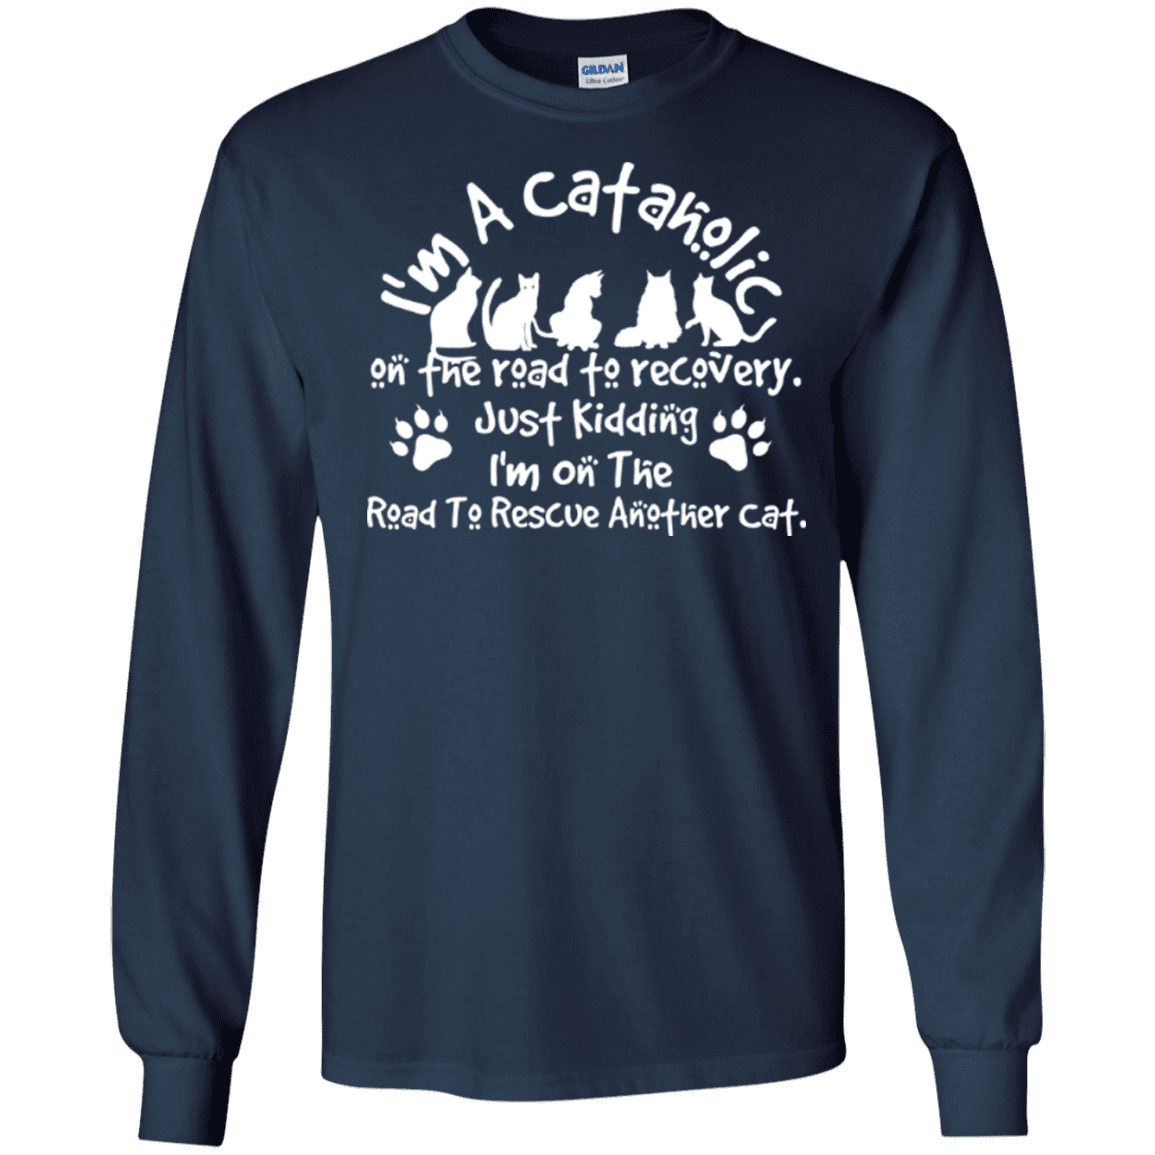 I'm A Cataholic - Long Sleeve T Shirt.